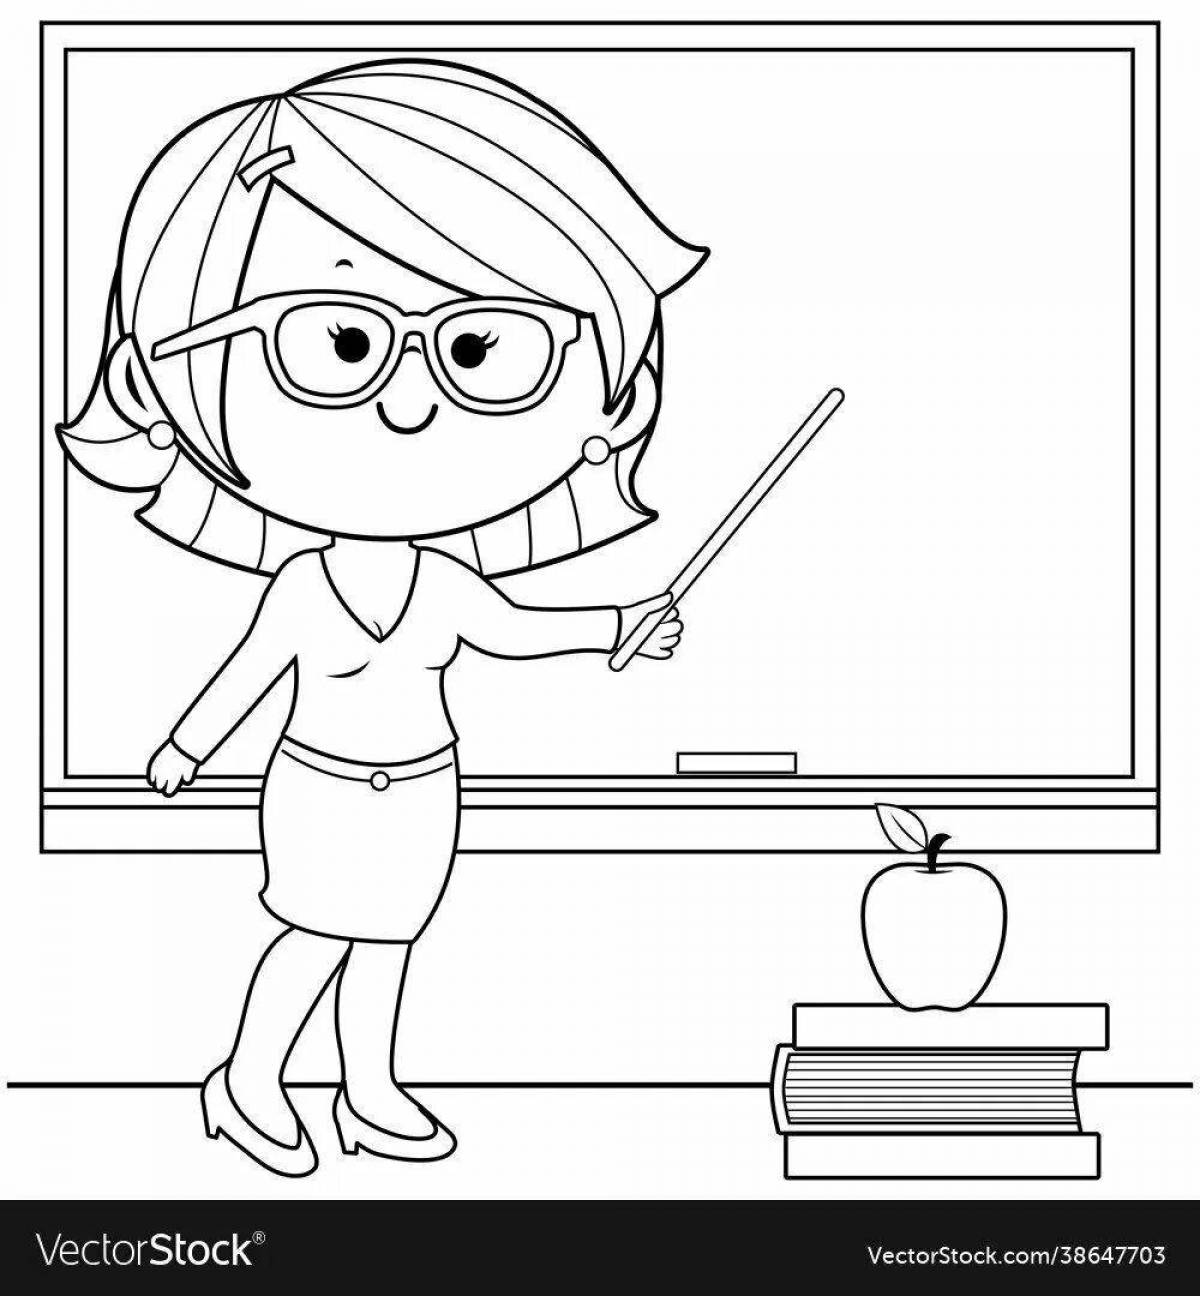 Teacher at blackboard with pointer #11